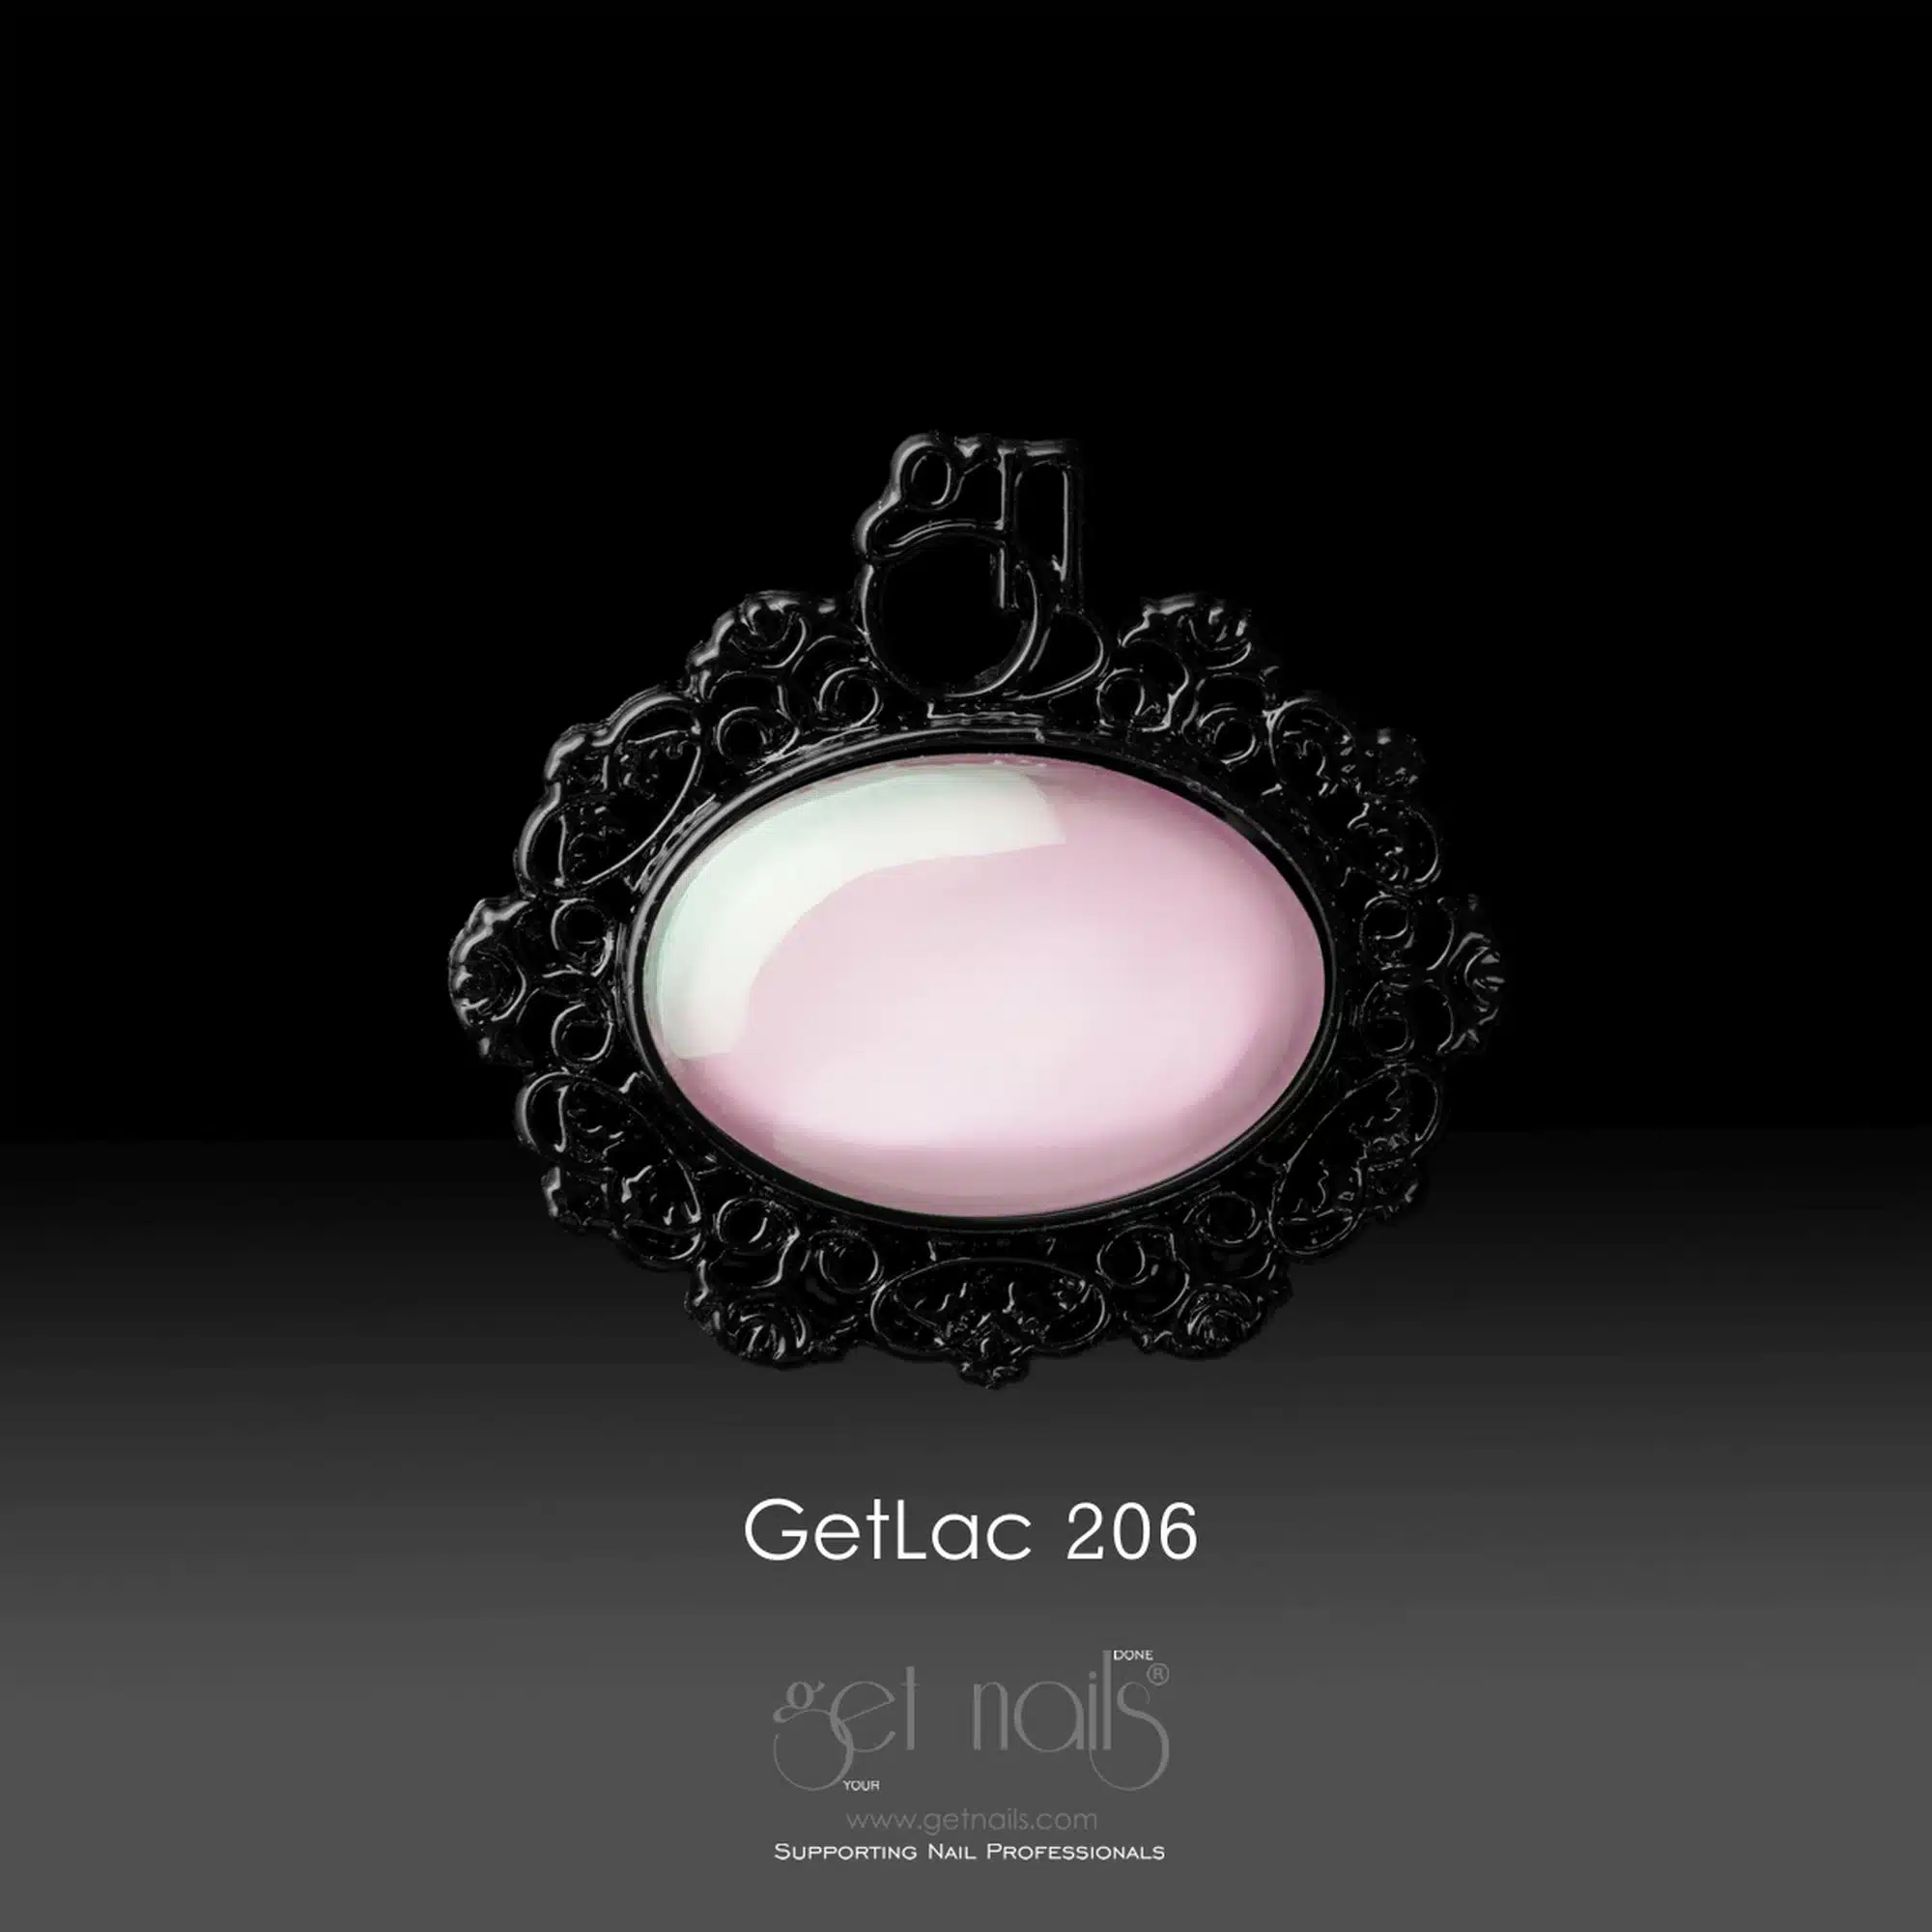 Get Nails Austria - GetLac 206 Candy Amaretto 15g